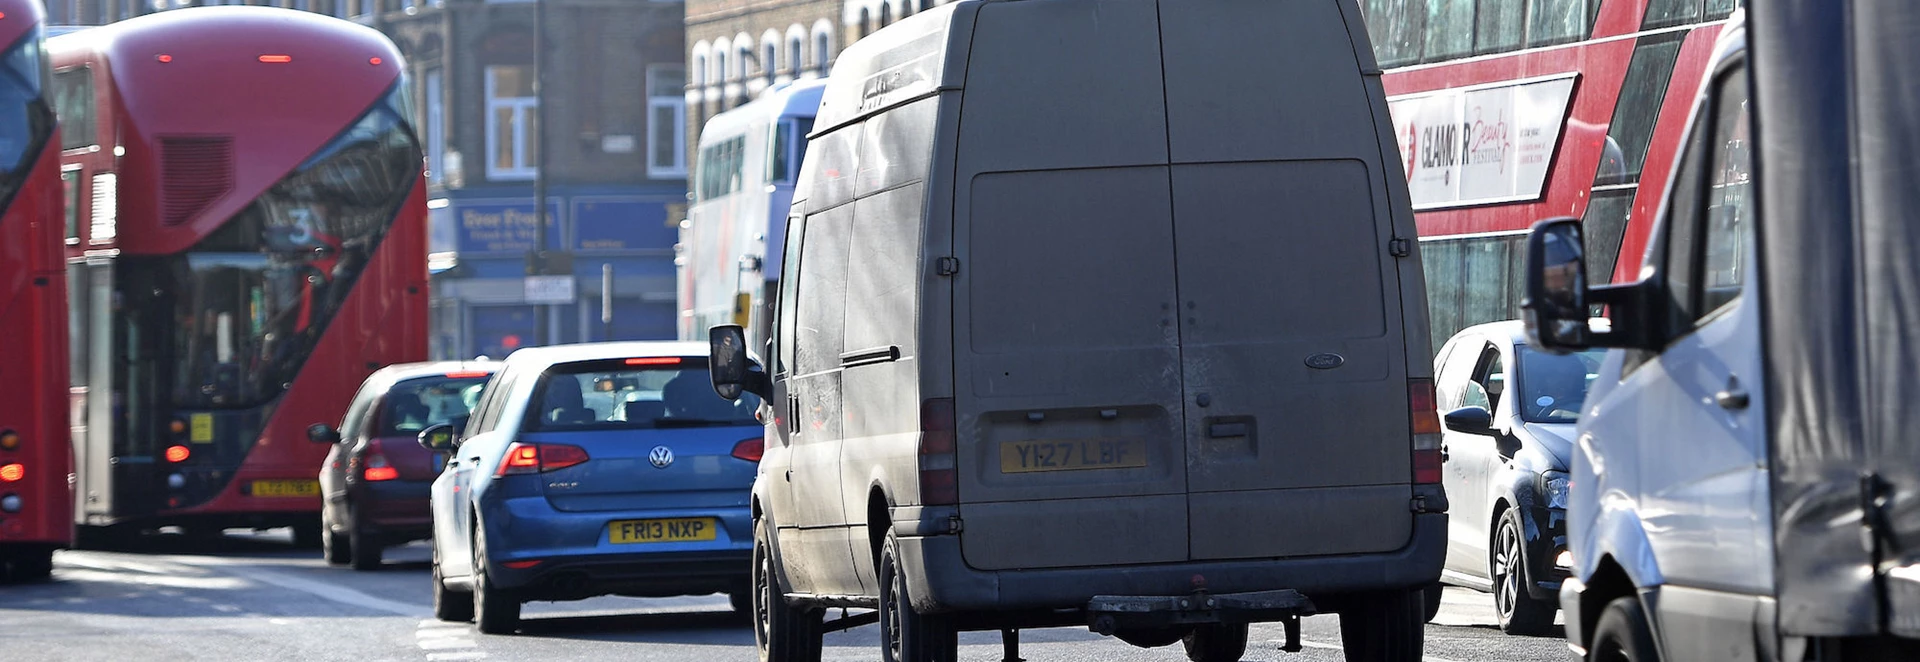 London councils consider petrol and diesel car ban